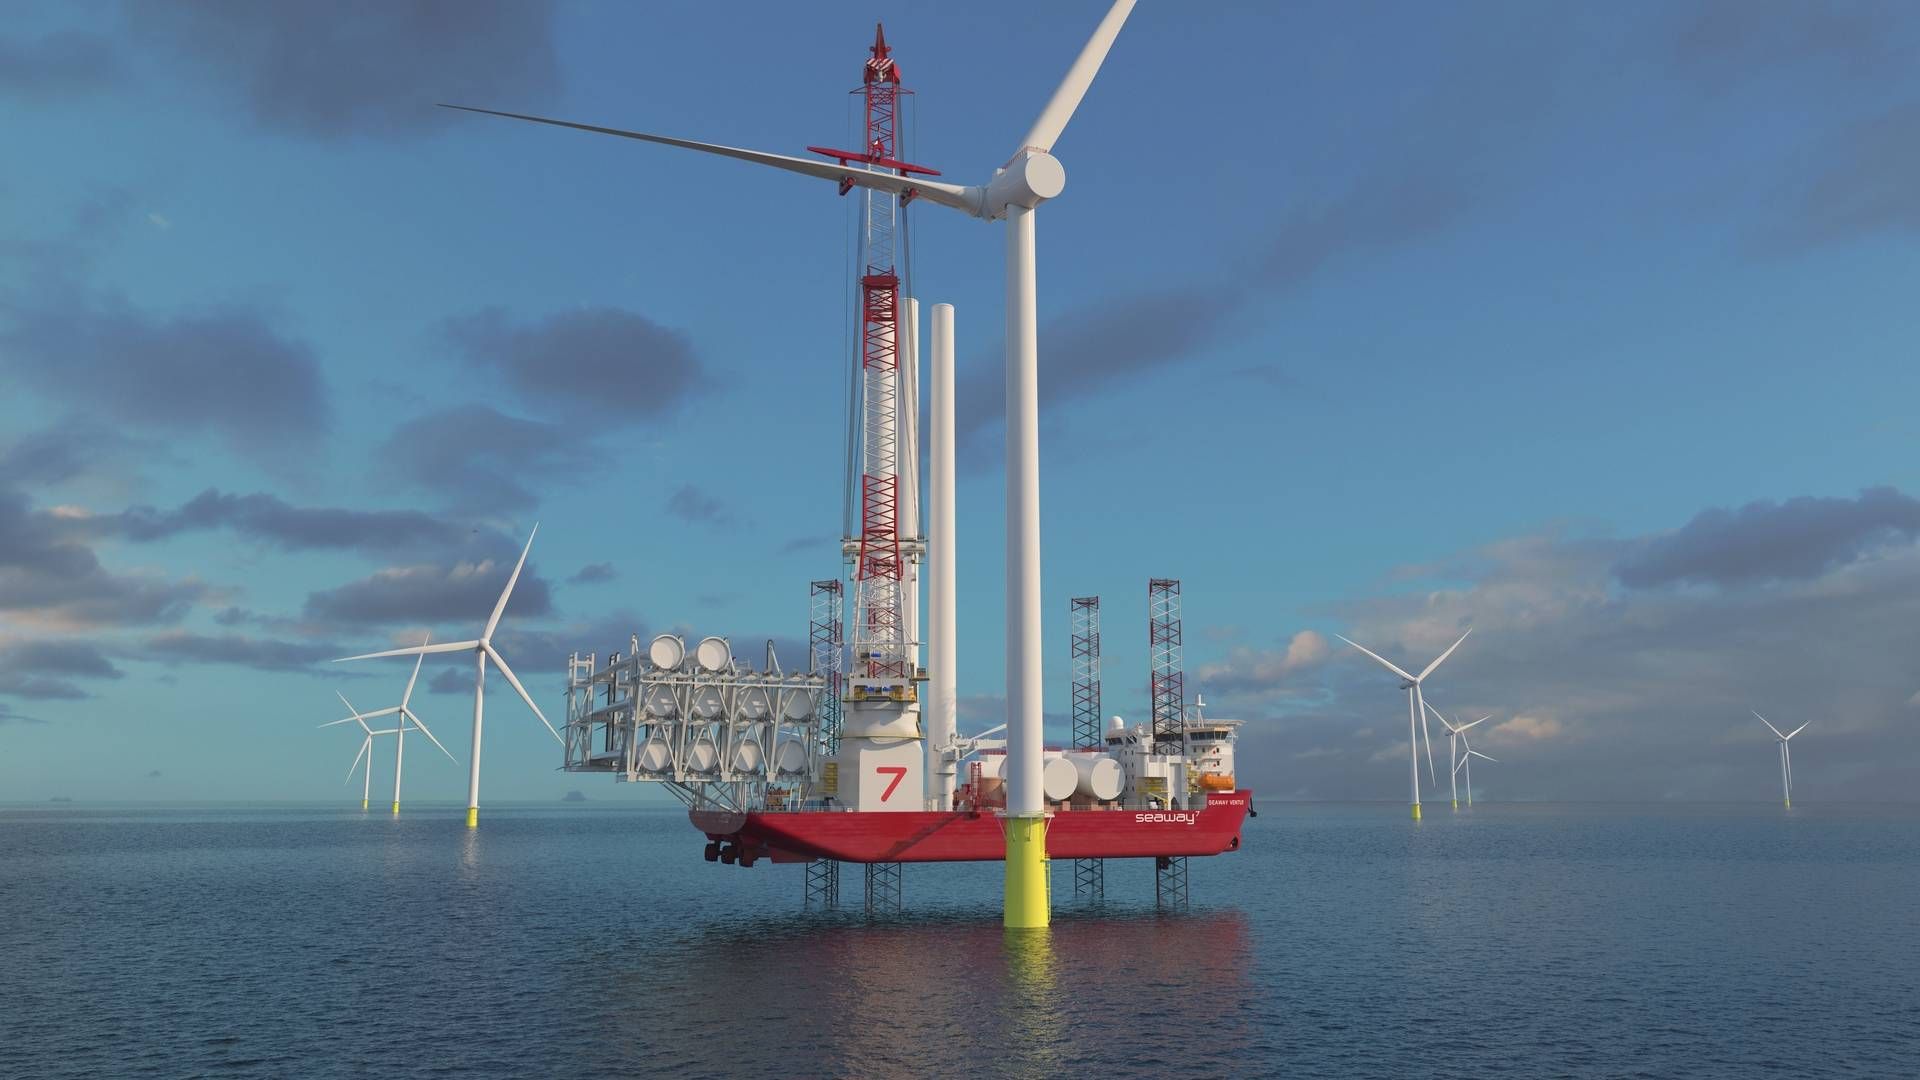 Seaway Ventus, a wind turbine installation vessel set to join the fleet in 2023. | Photo: Seaway 7